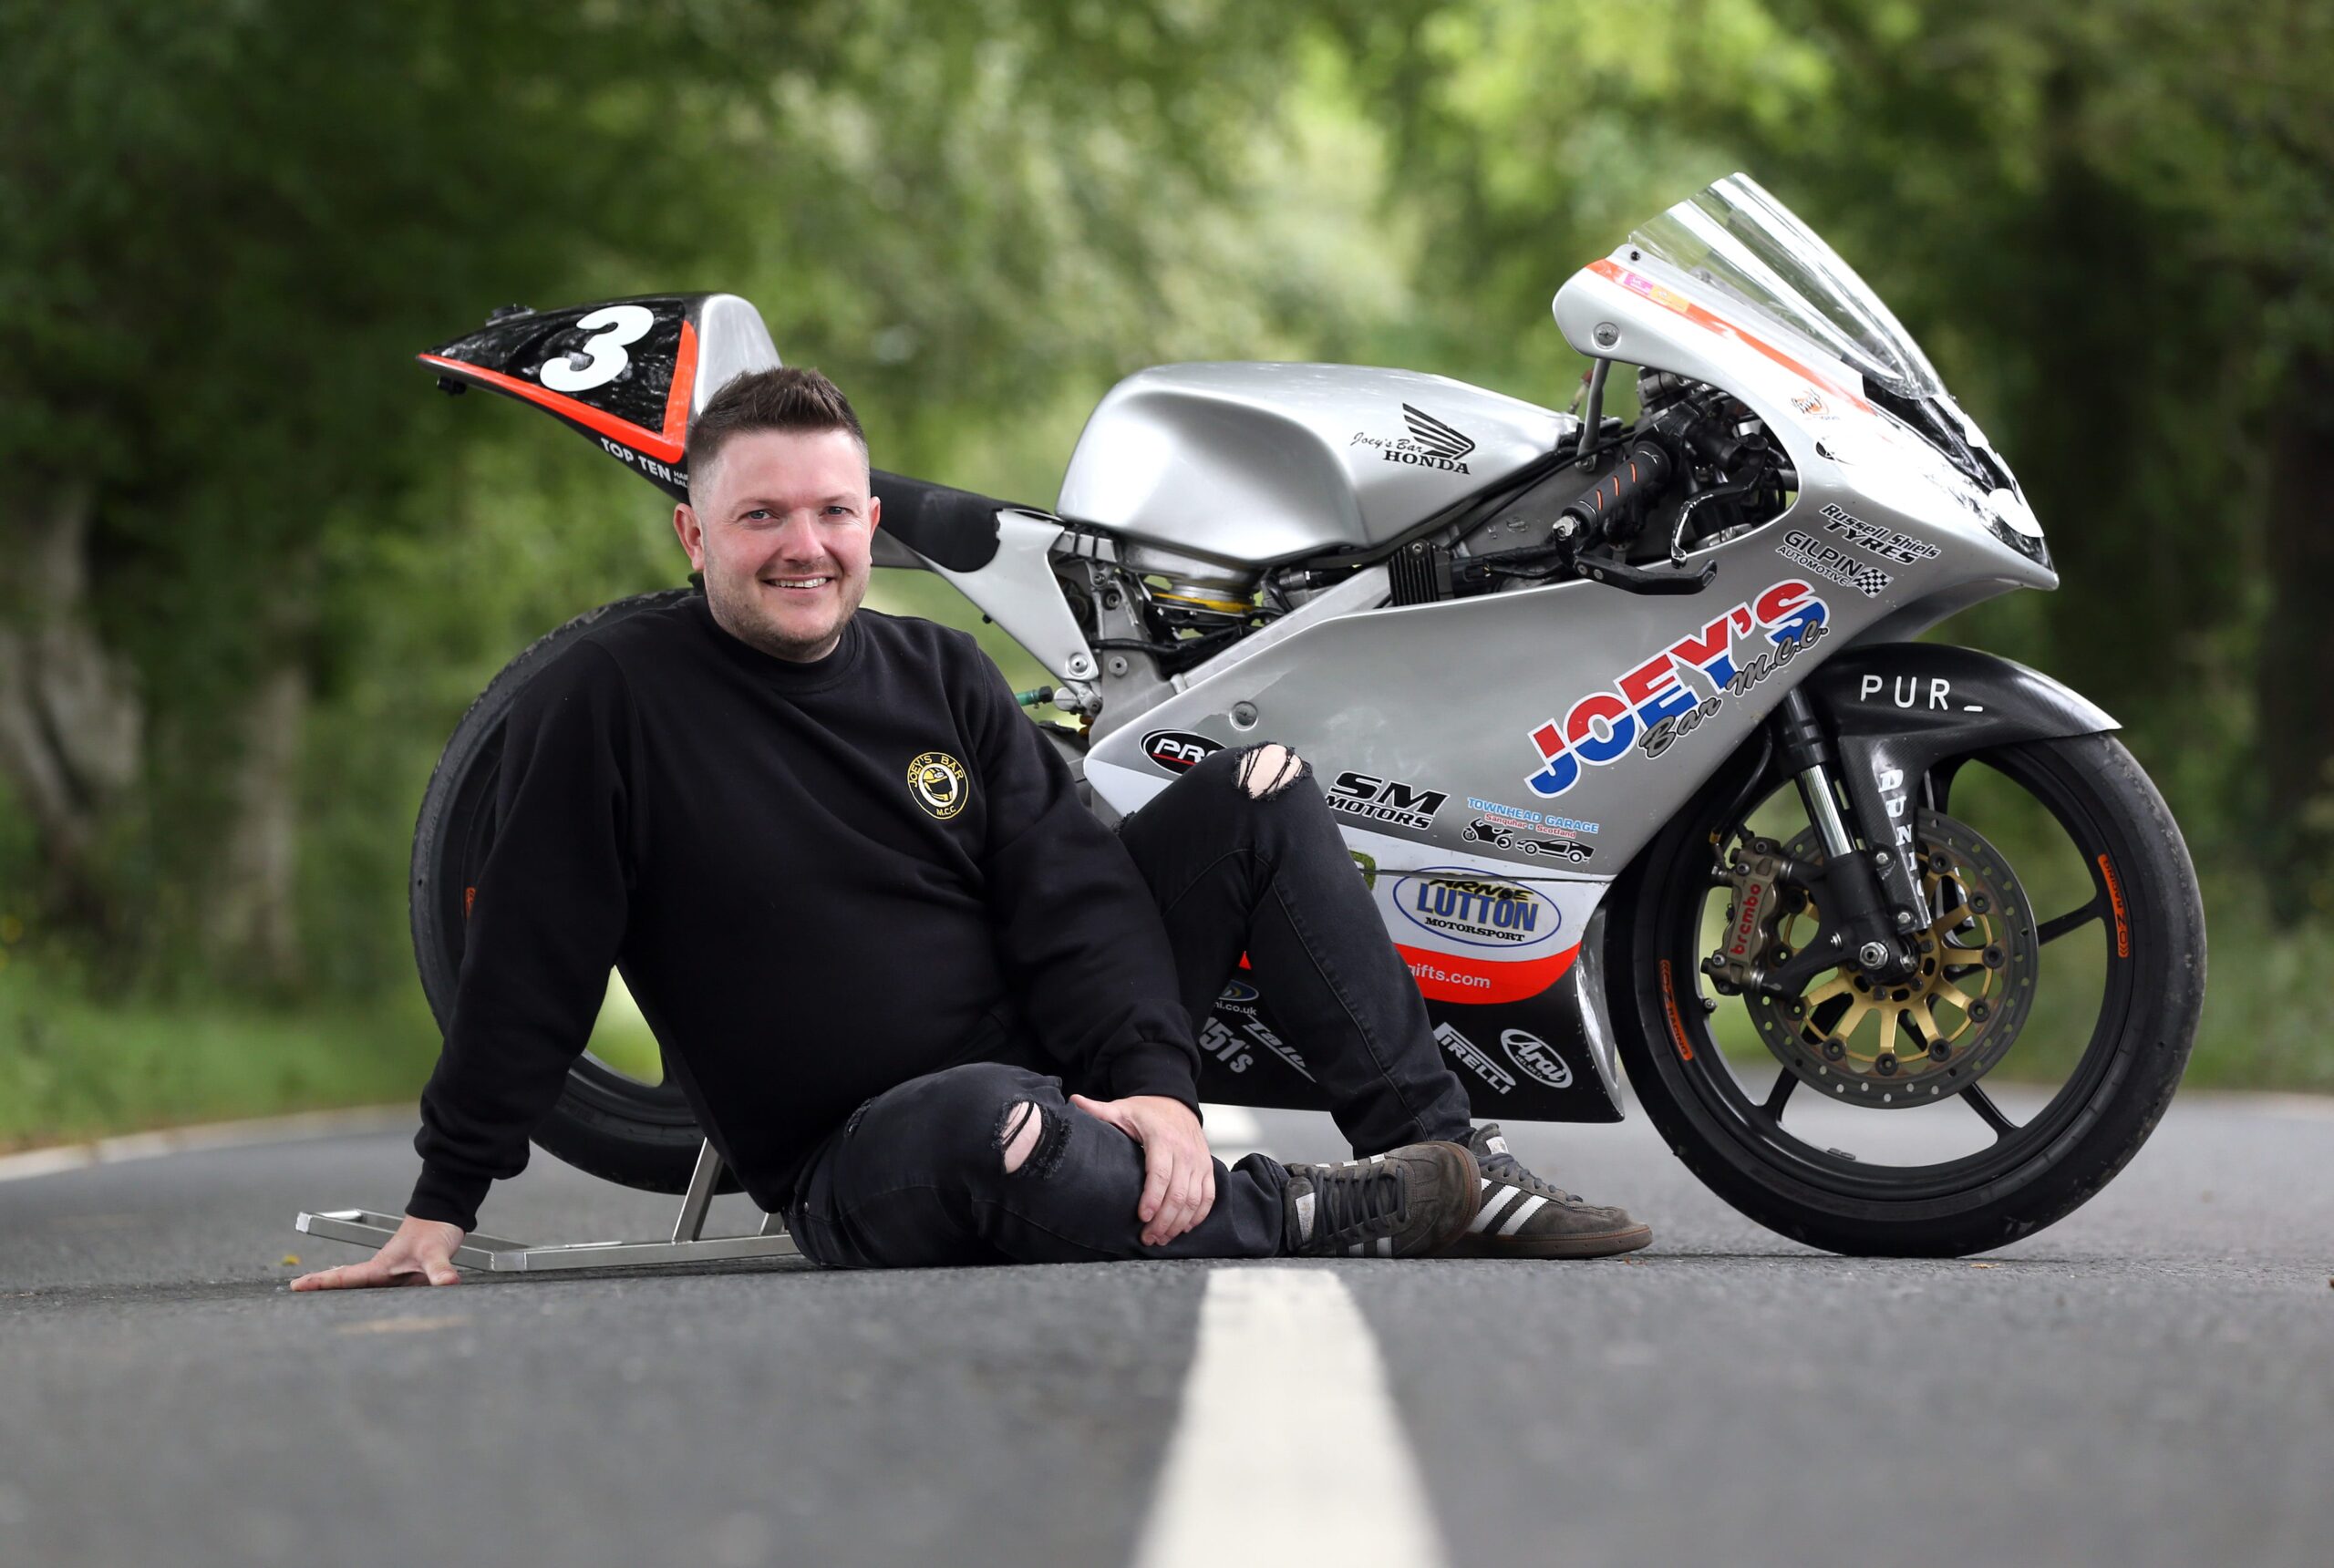 Legendary Joey/DJ Battle To Be Celebrated At 2019 FonaCAB Ulster Grand Prix